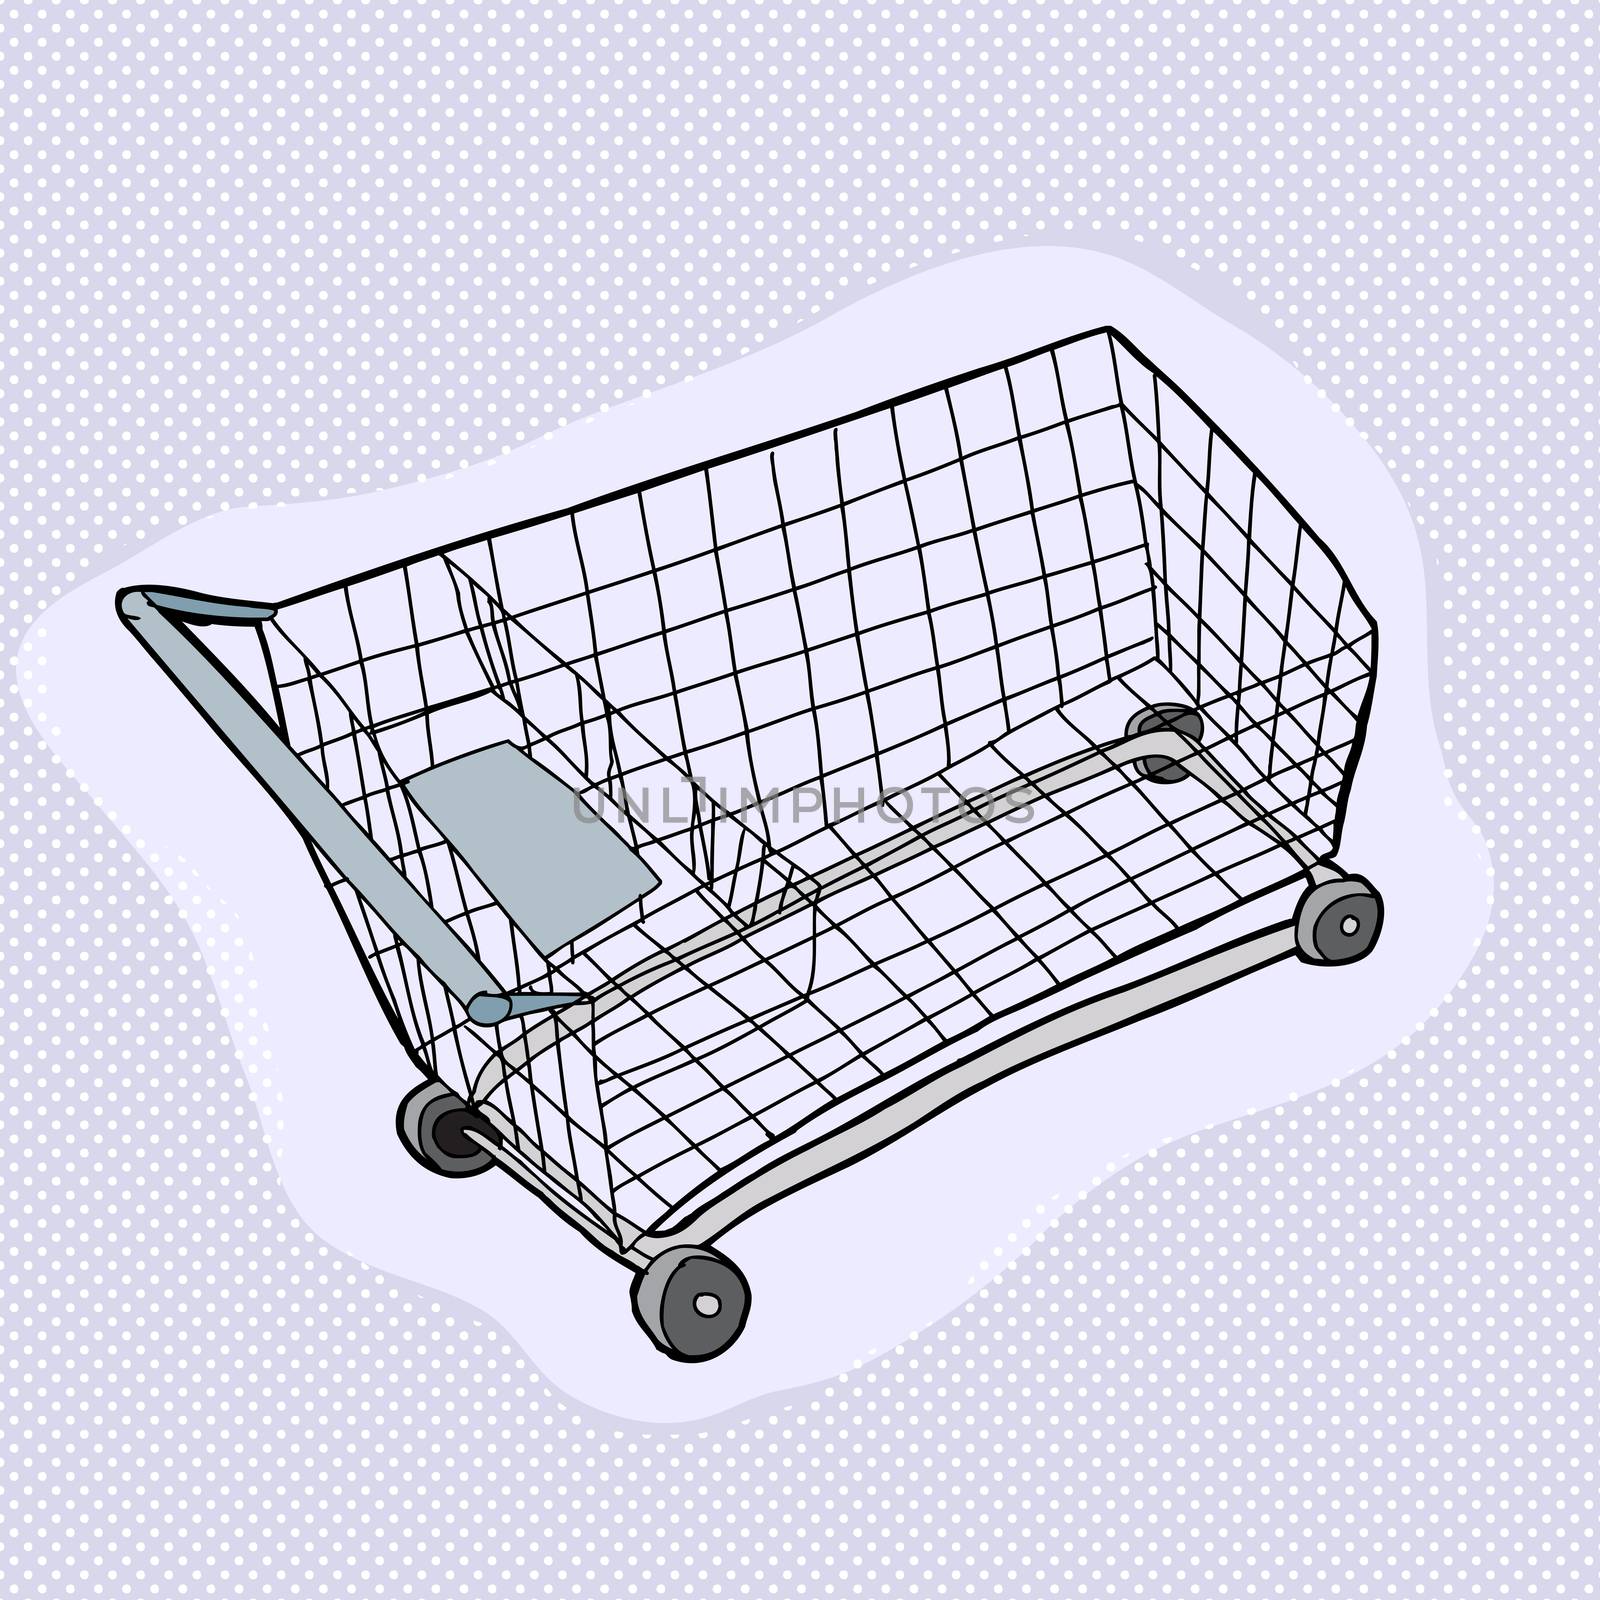 Single Shopping Cart by TheBlackRhino